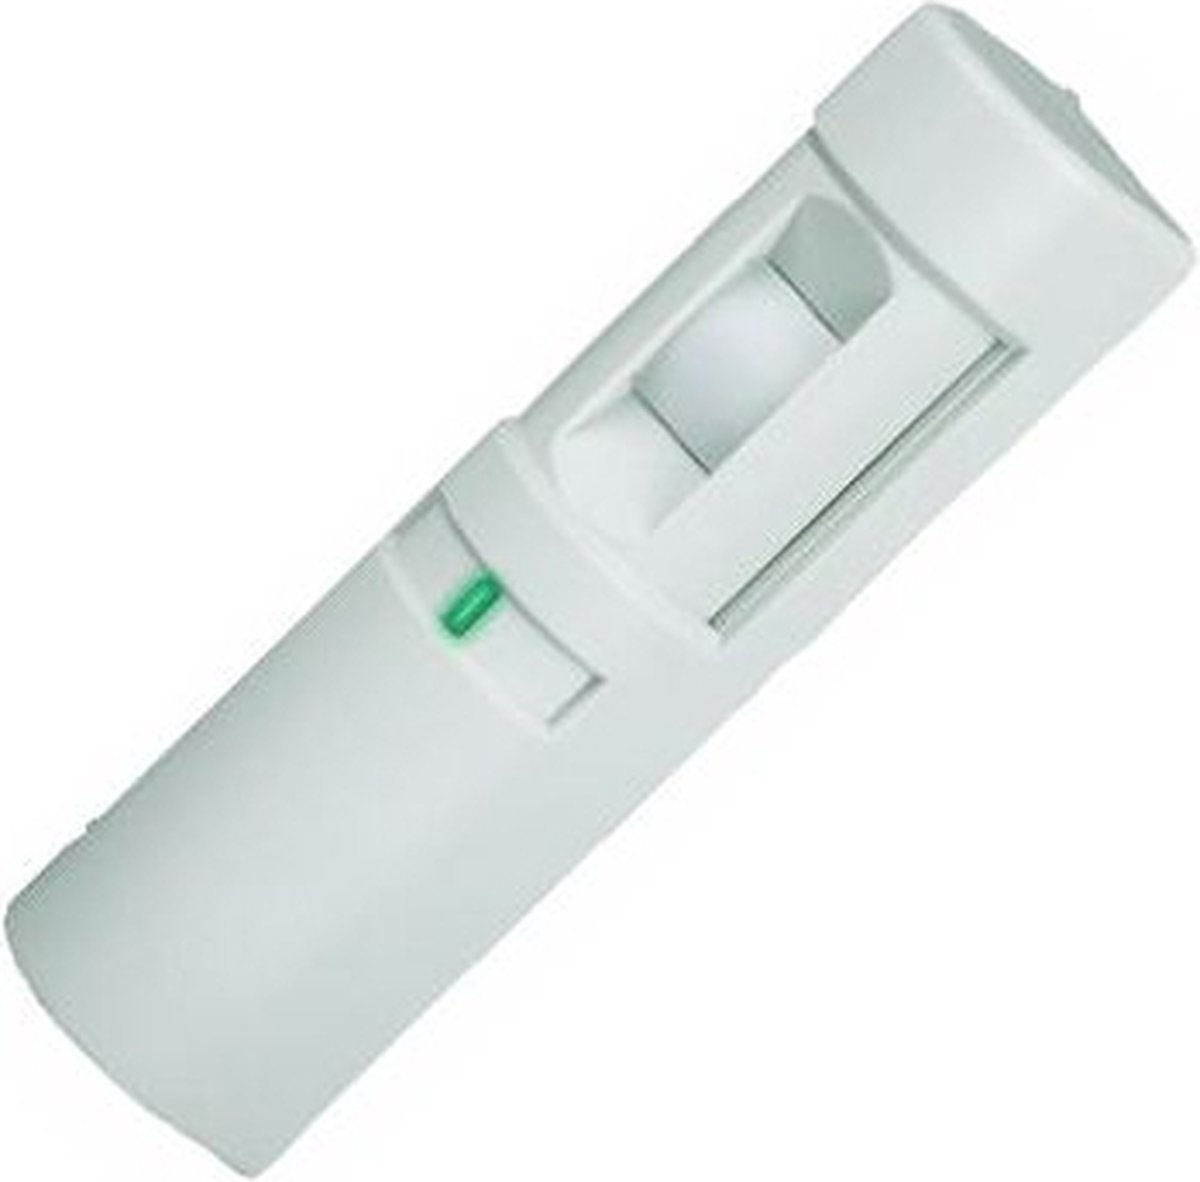 Bosch deur sensor detector, DS150I in lichtgrijs - Bosch Intruder Alarmsysteem, eigendomveilig.nl